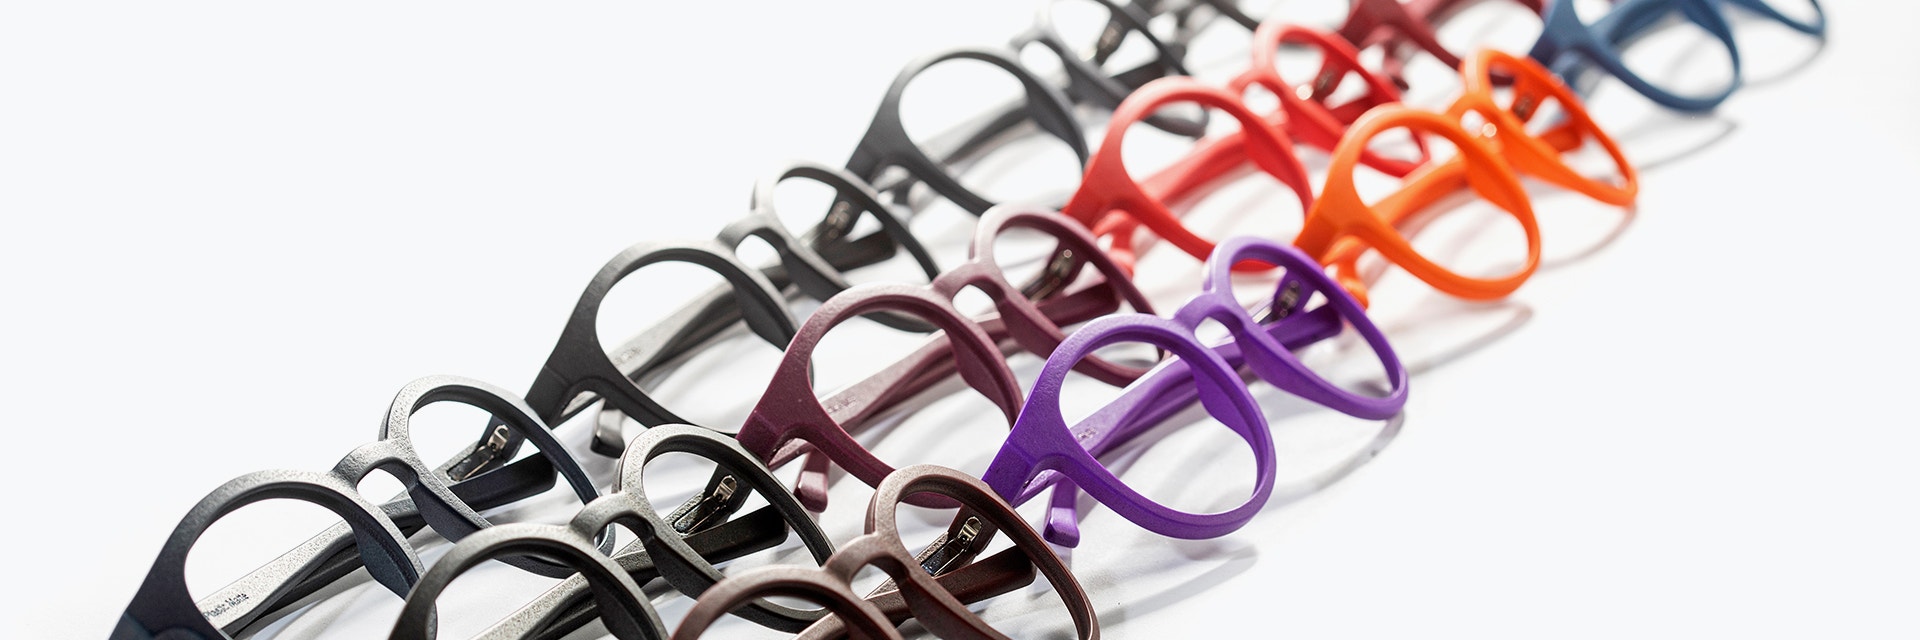 File di montature per occhiali in diversi colori stampate in 3D